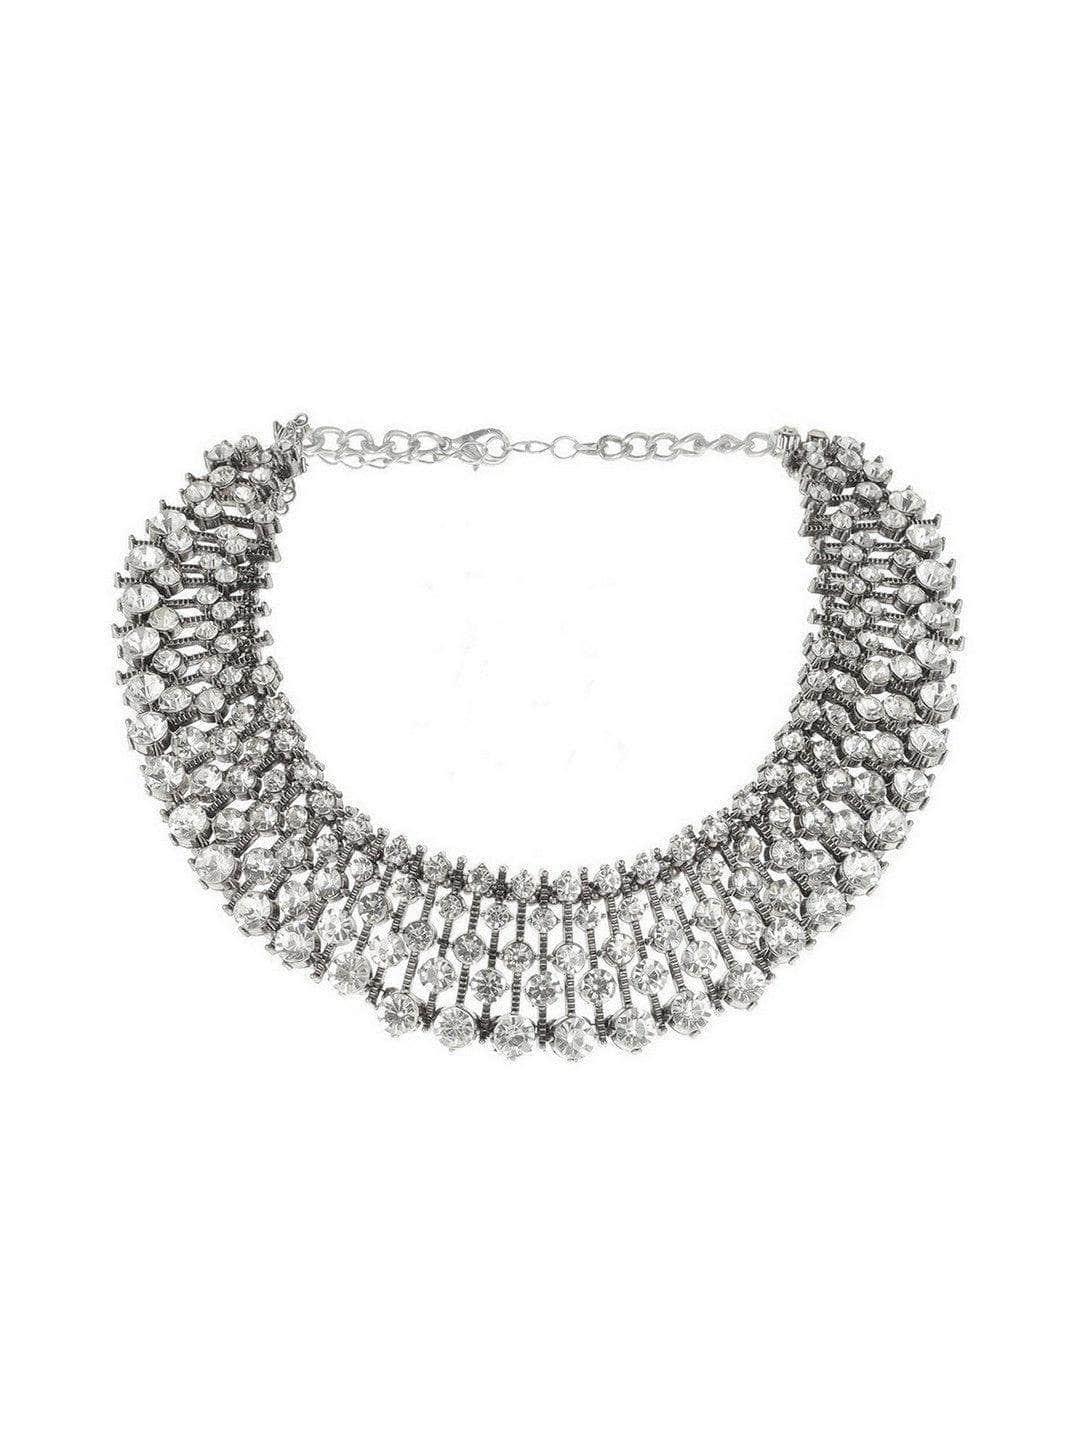 Ishhaara Dolly Singh In Diamond Choker Necklace